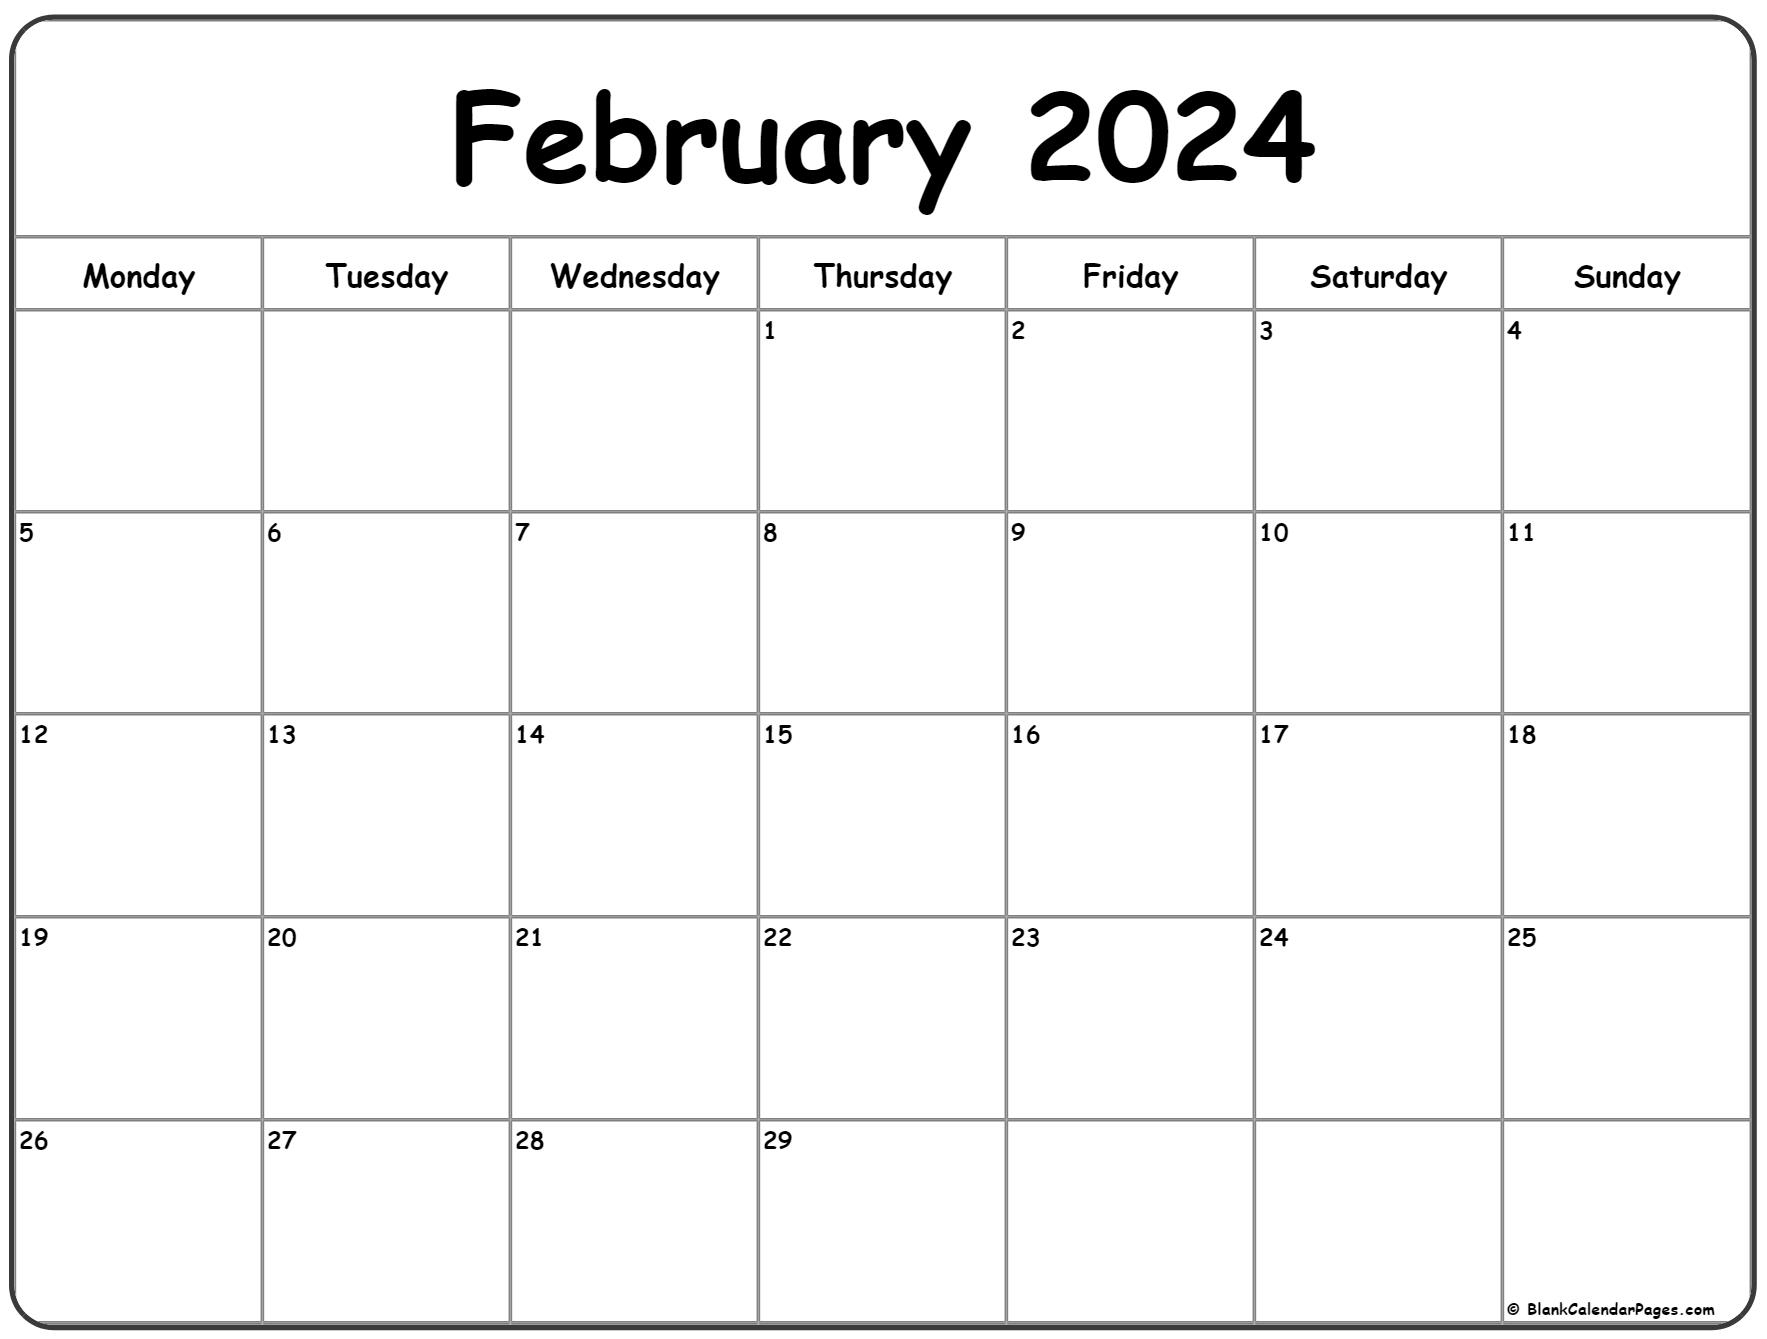 February 2024 Monday Calendar | Monday To Sunday for 2024 Feb Calendar Printable